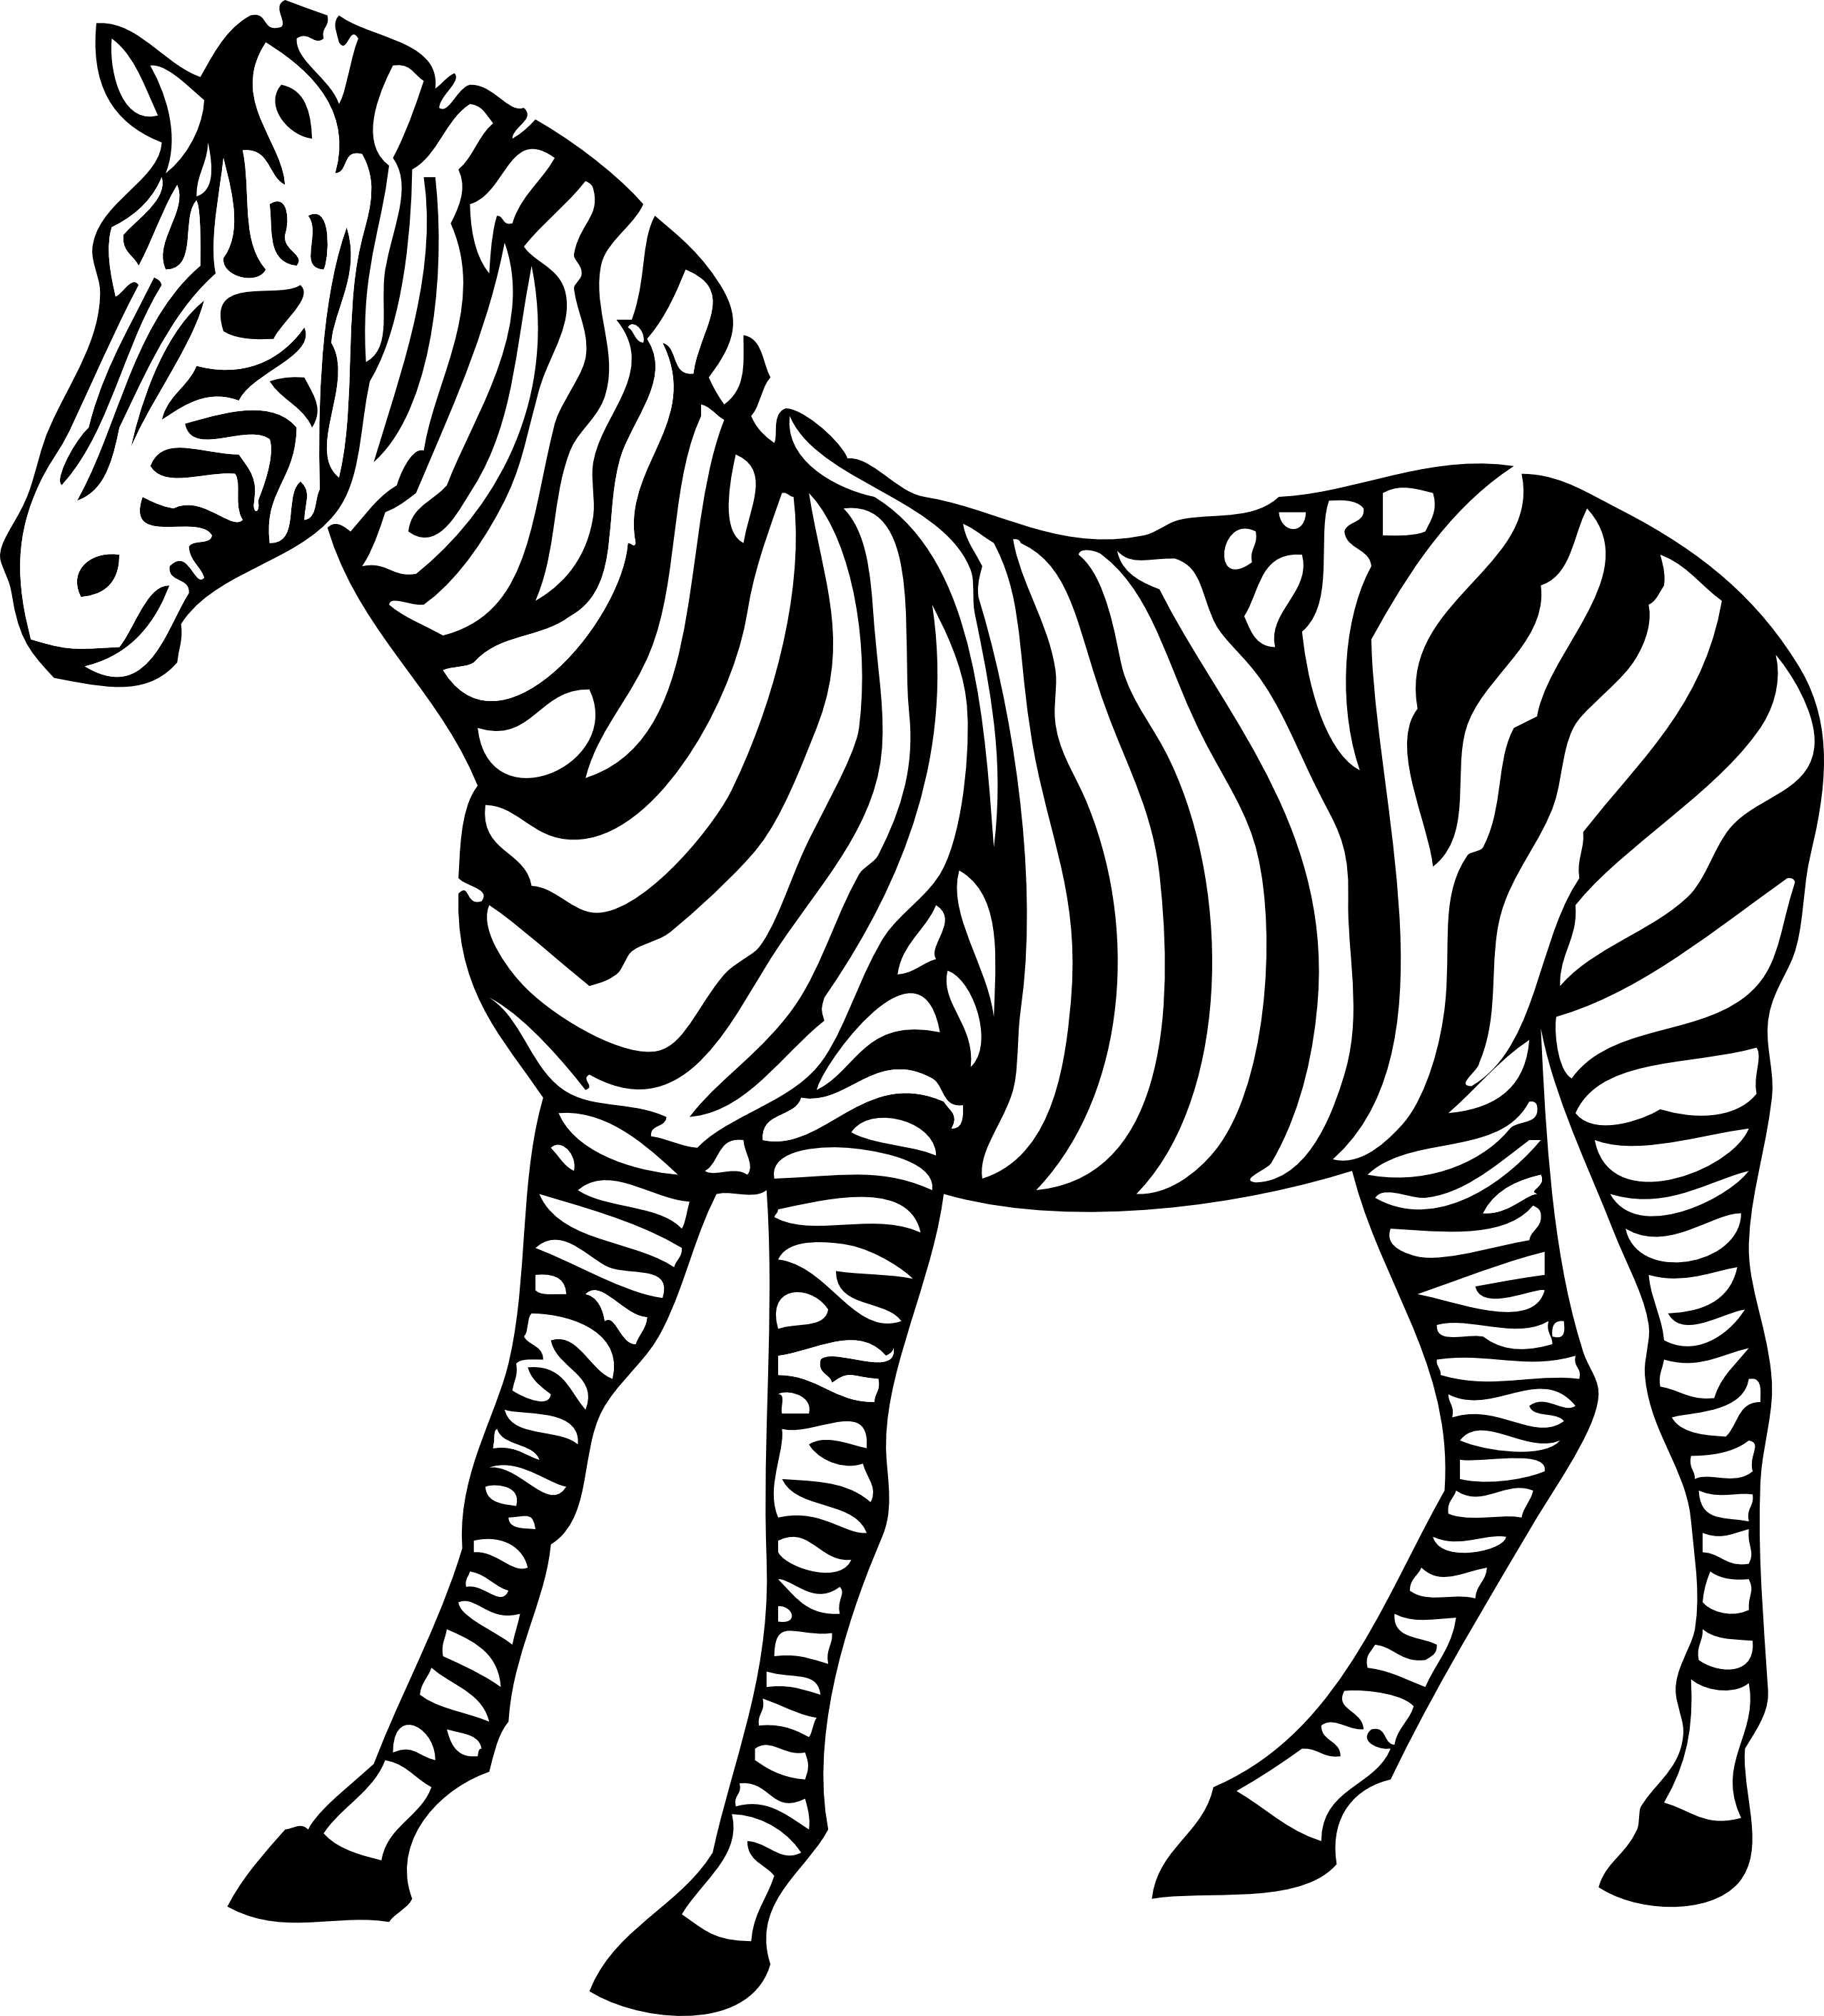 Zebra clipart #7, Download drawings